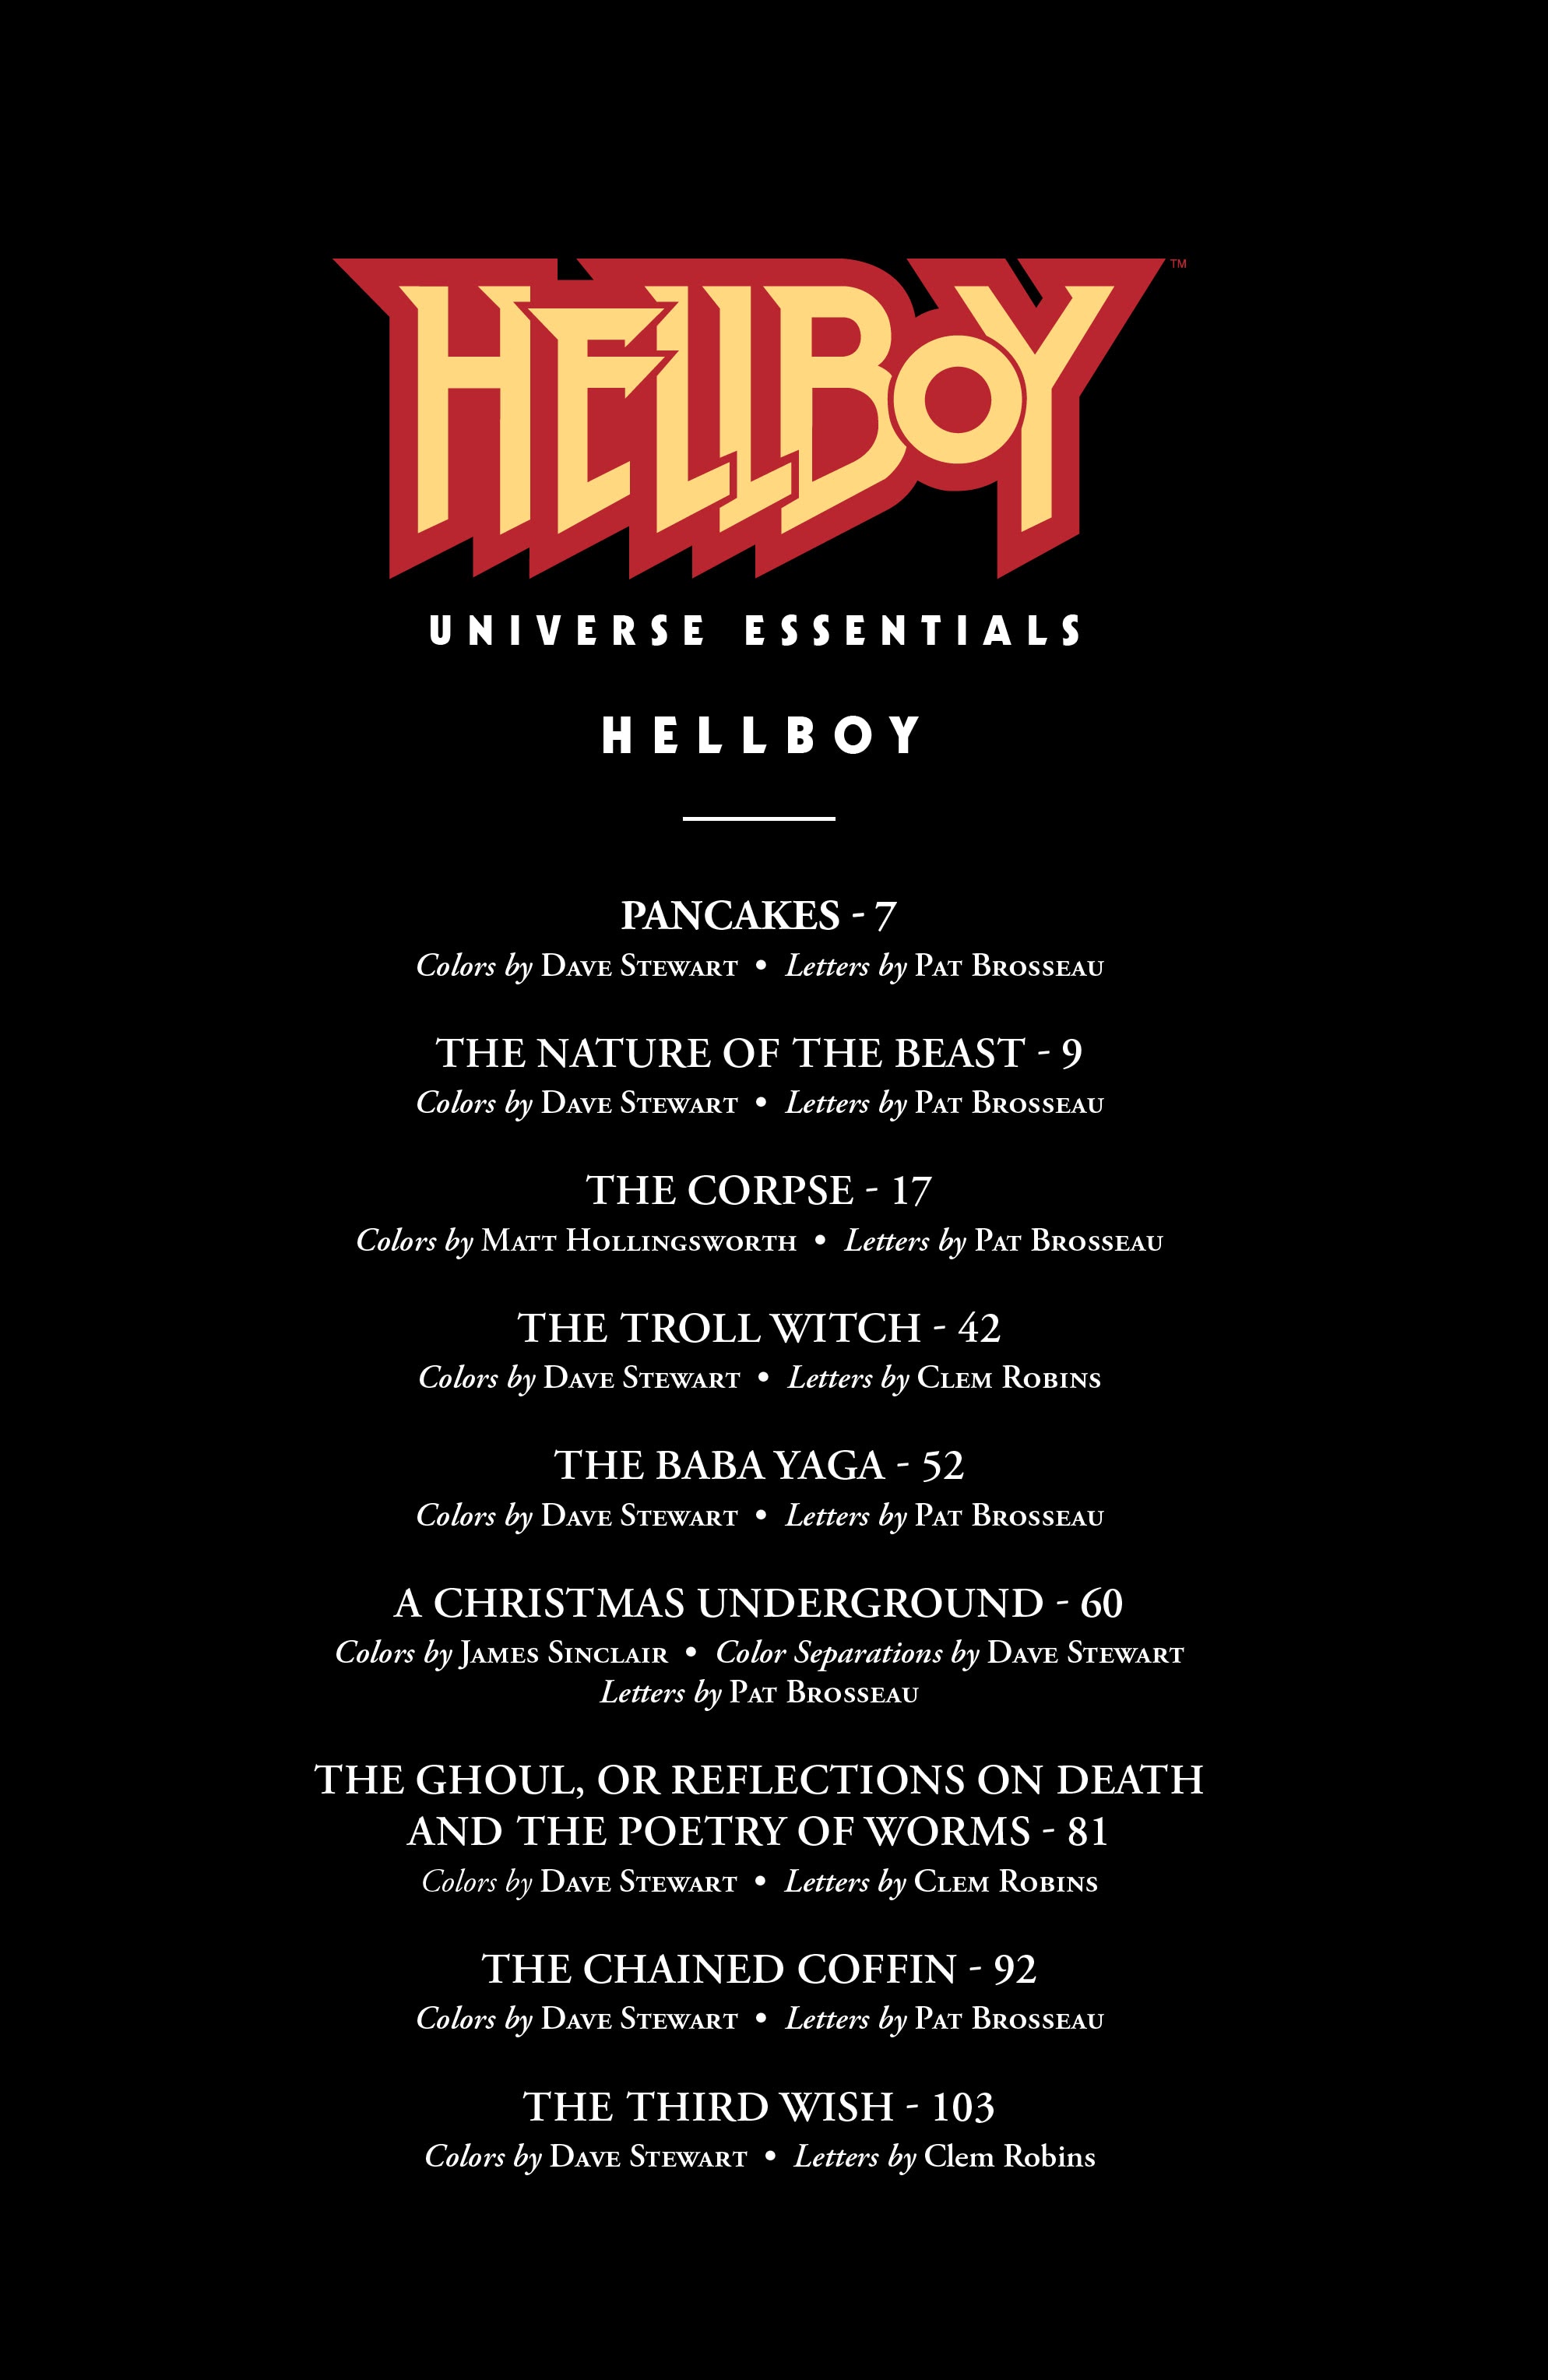 Read online Hellboy Universe Essentials: Hellboy comic -  Issue # TPB (Part 1) - 5